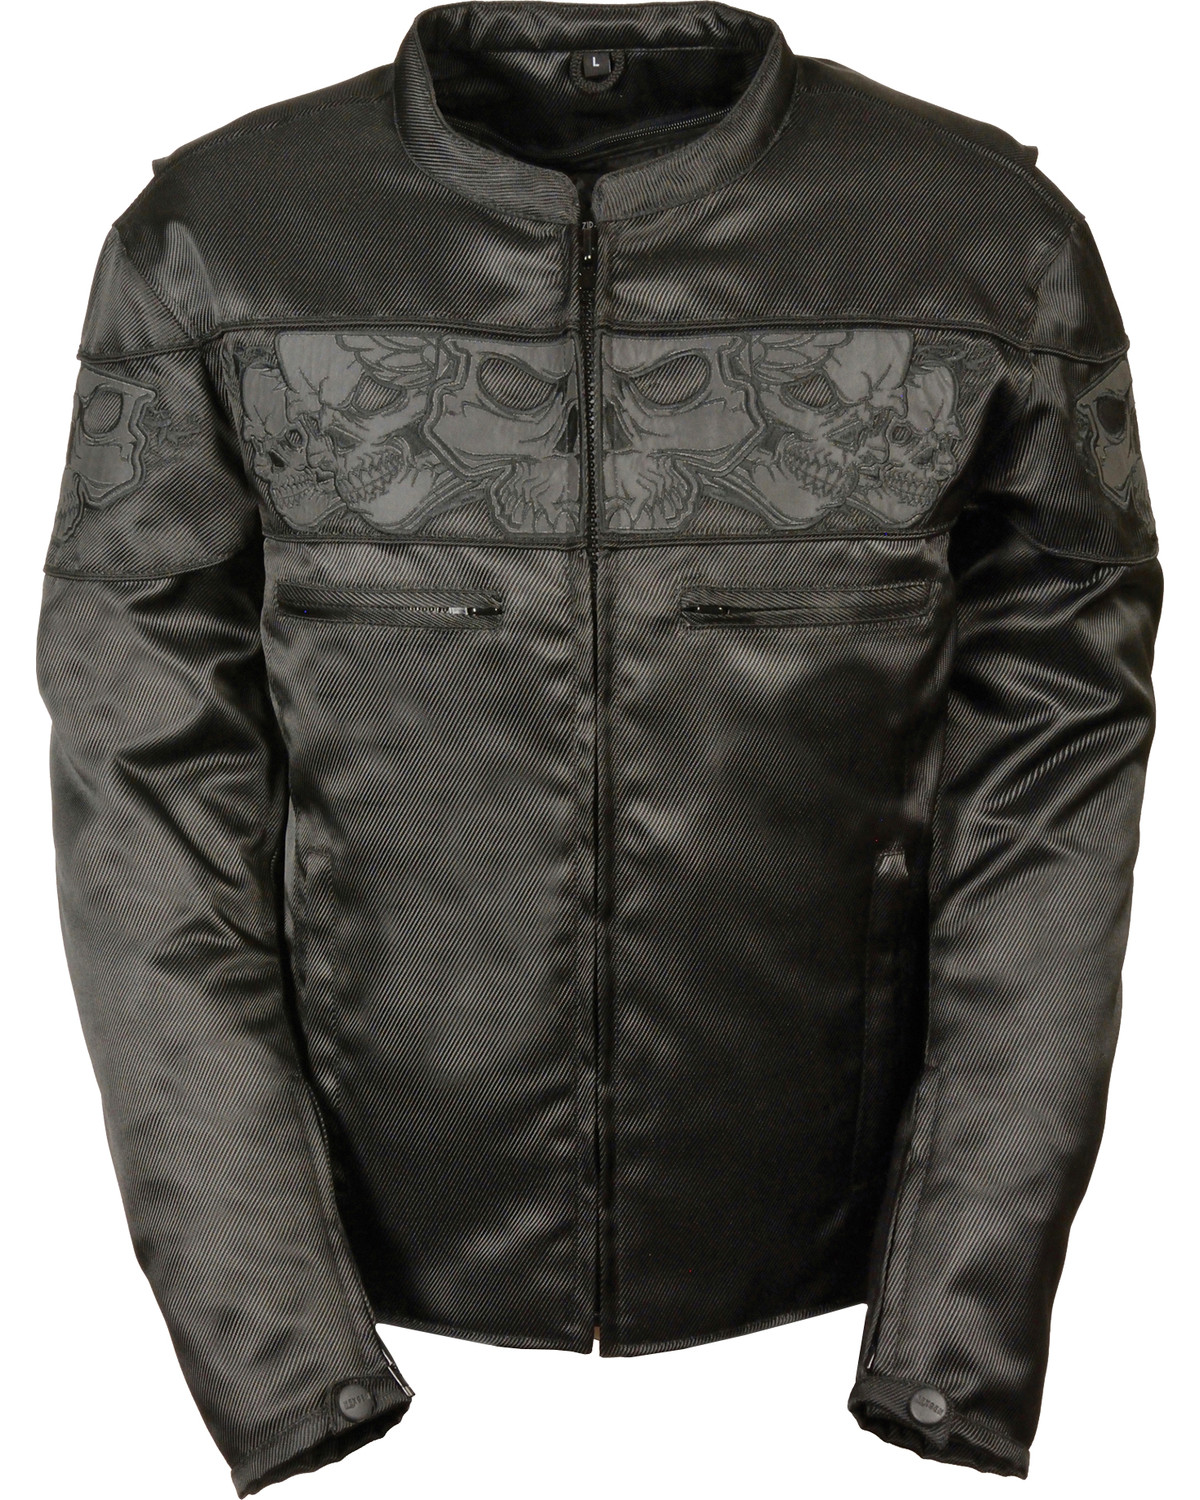 Milwaukee Leather Men's Reflective Skulls Textile Jacket - Big